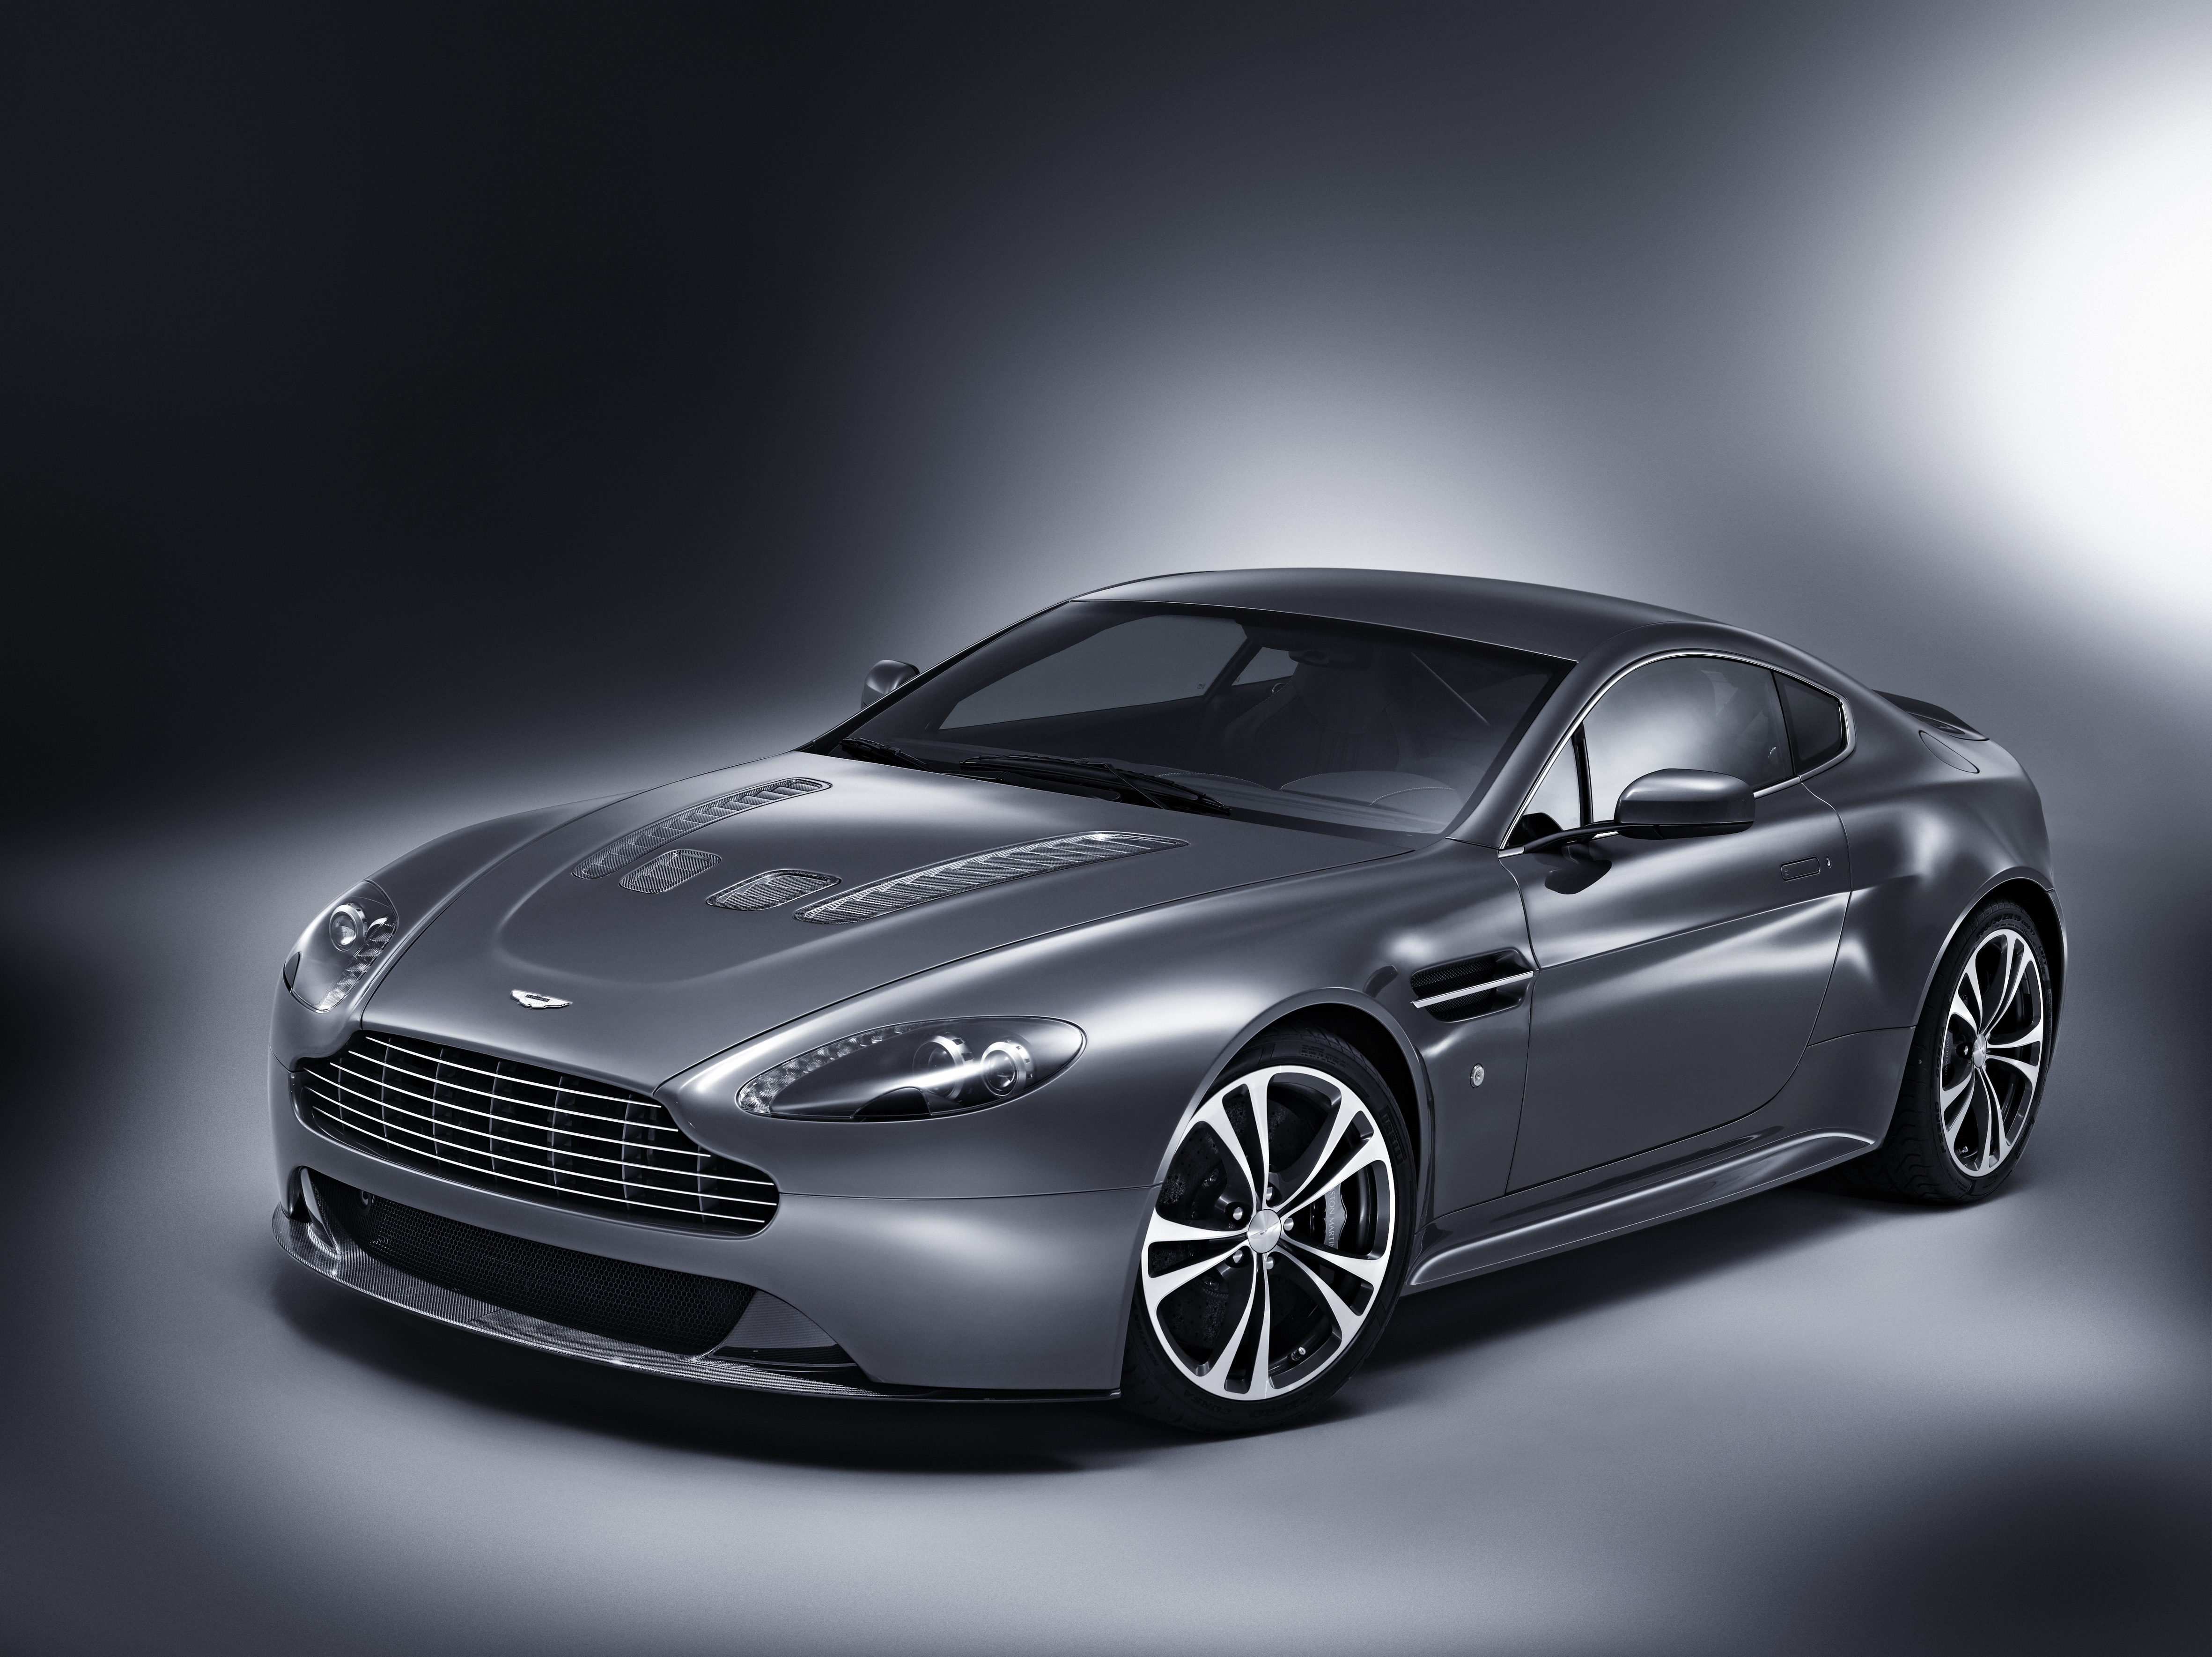 cars, Aston Martin, gray, silver, vehicles - desktop wallpaper